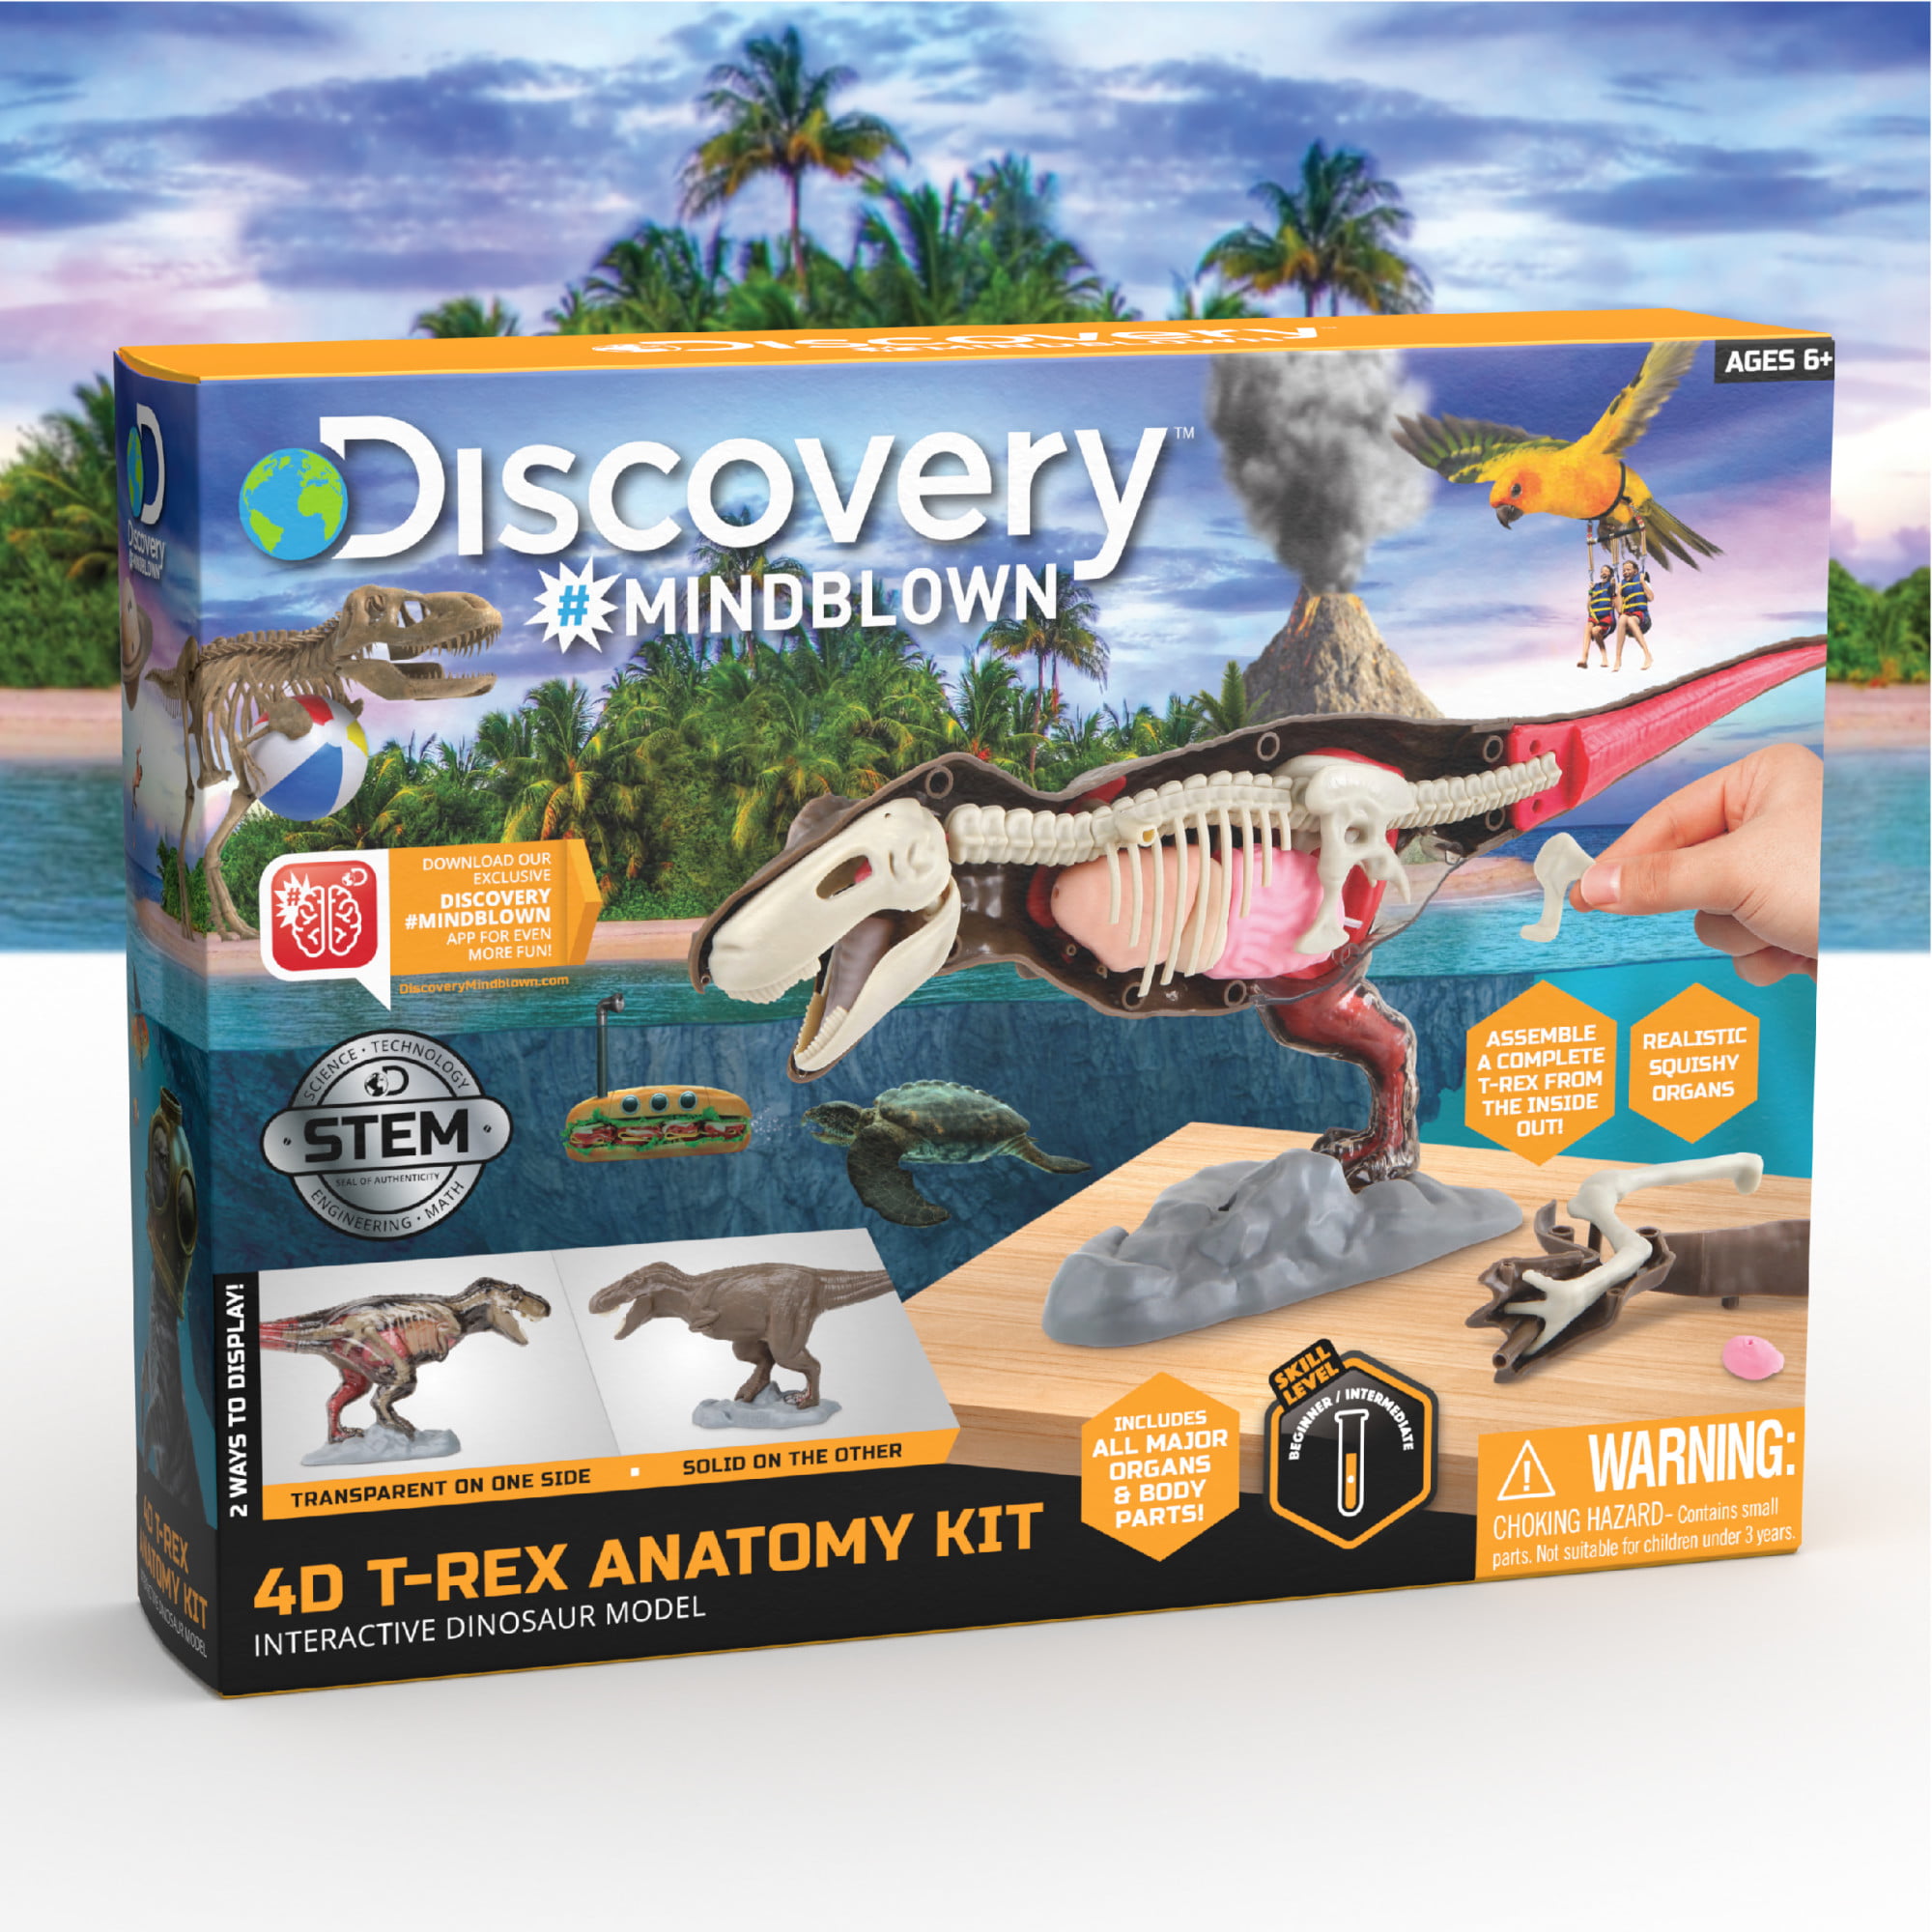 Discovery #MINDBLOWN 4D T-Rex Dinosaur Anatomy Kit, Interactive 